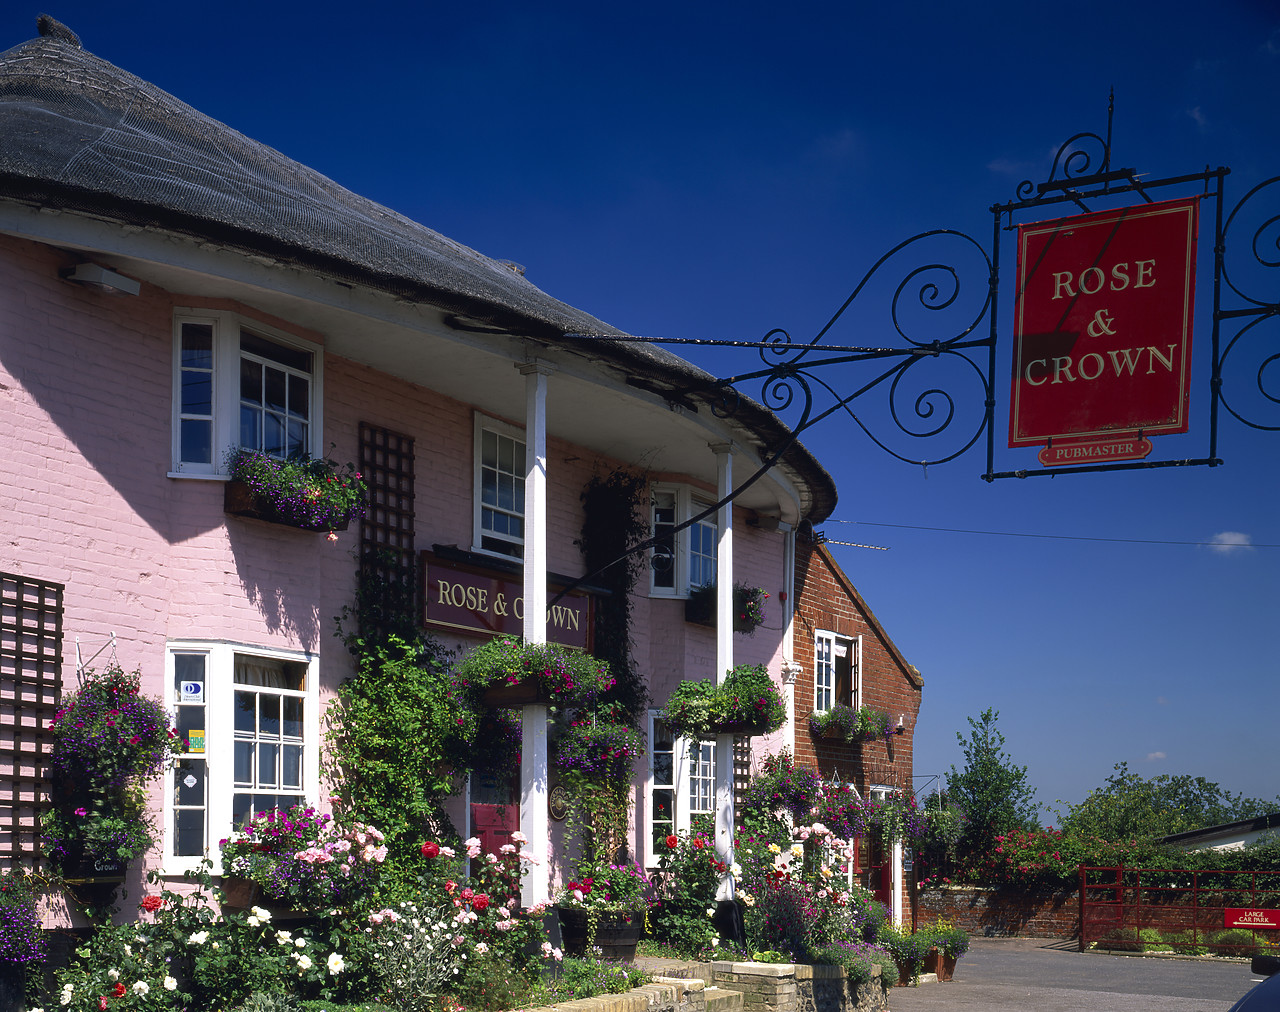 #970348-1 - The Rose & Crown Pub, Stanton, Suffolk, England